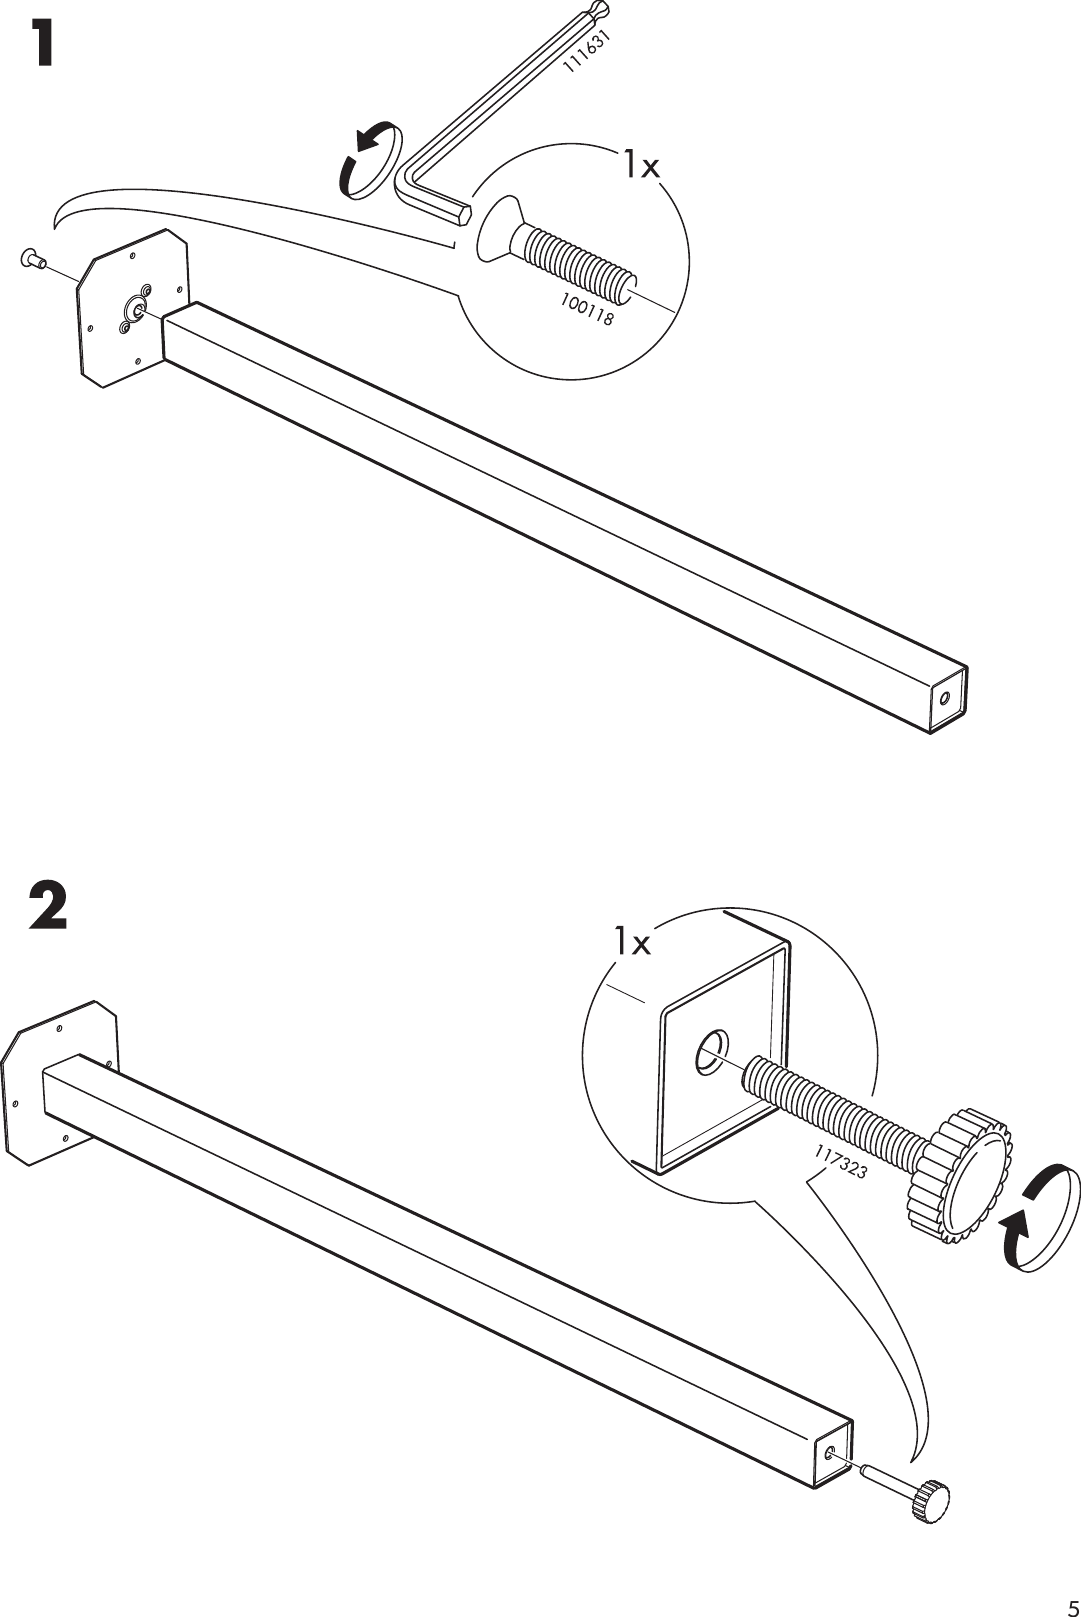 Page 5 of 8 - Ikea Ikea-Utby-Leg-35-3-8-Assembly-Instruction